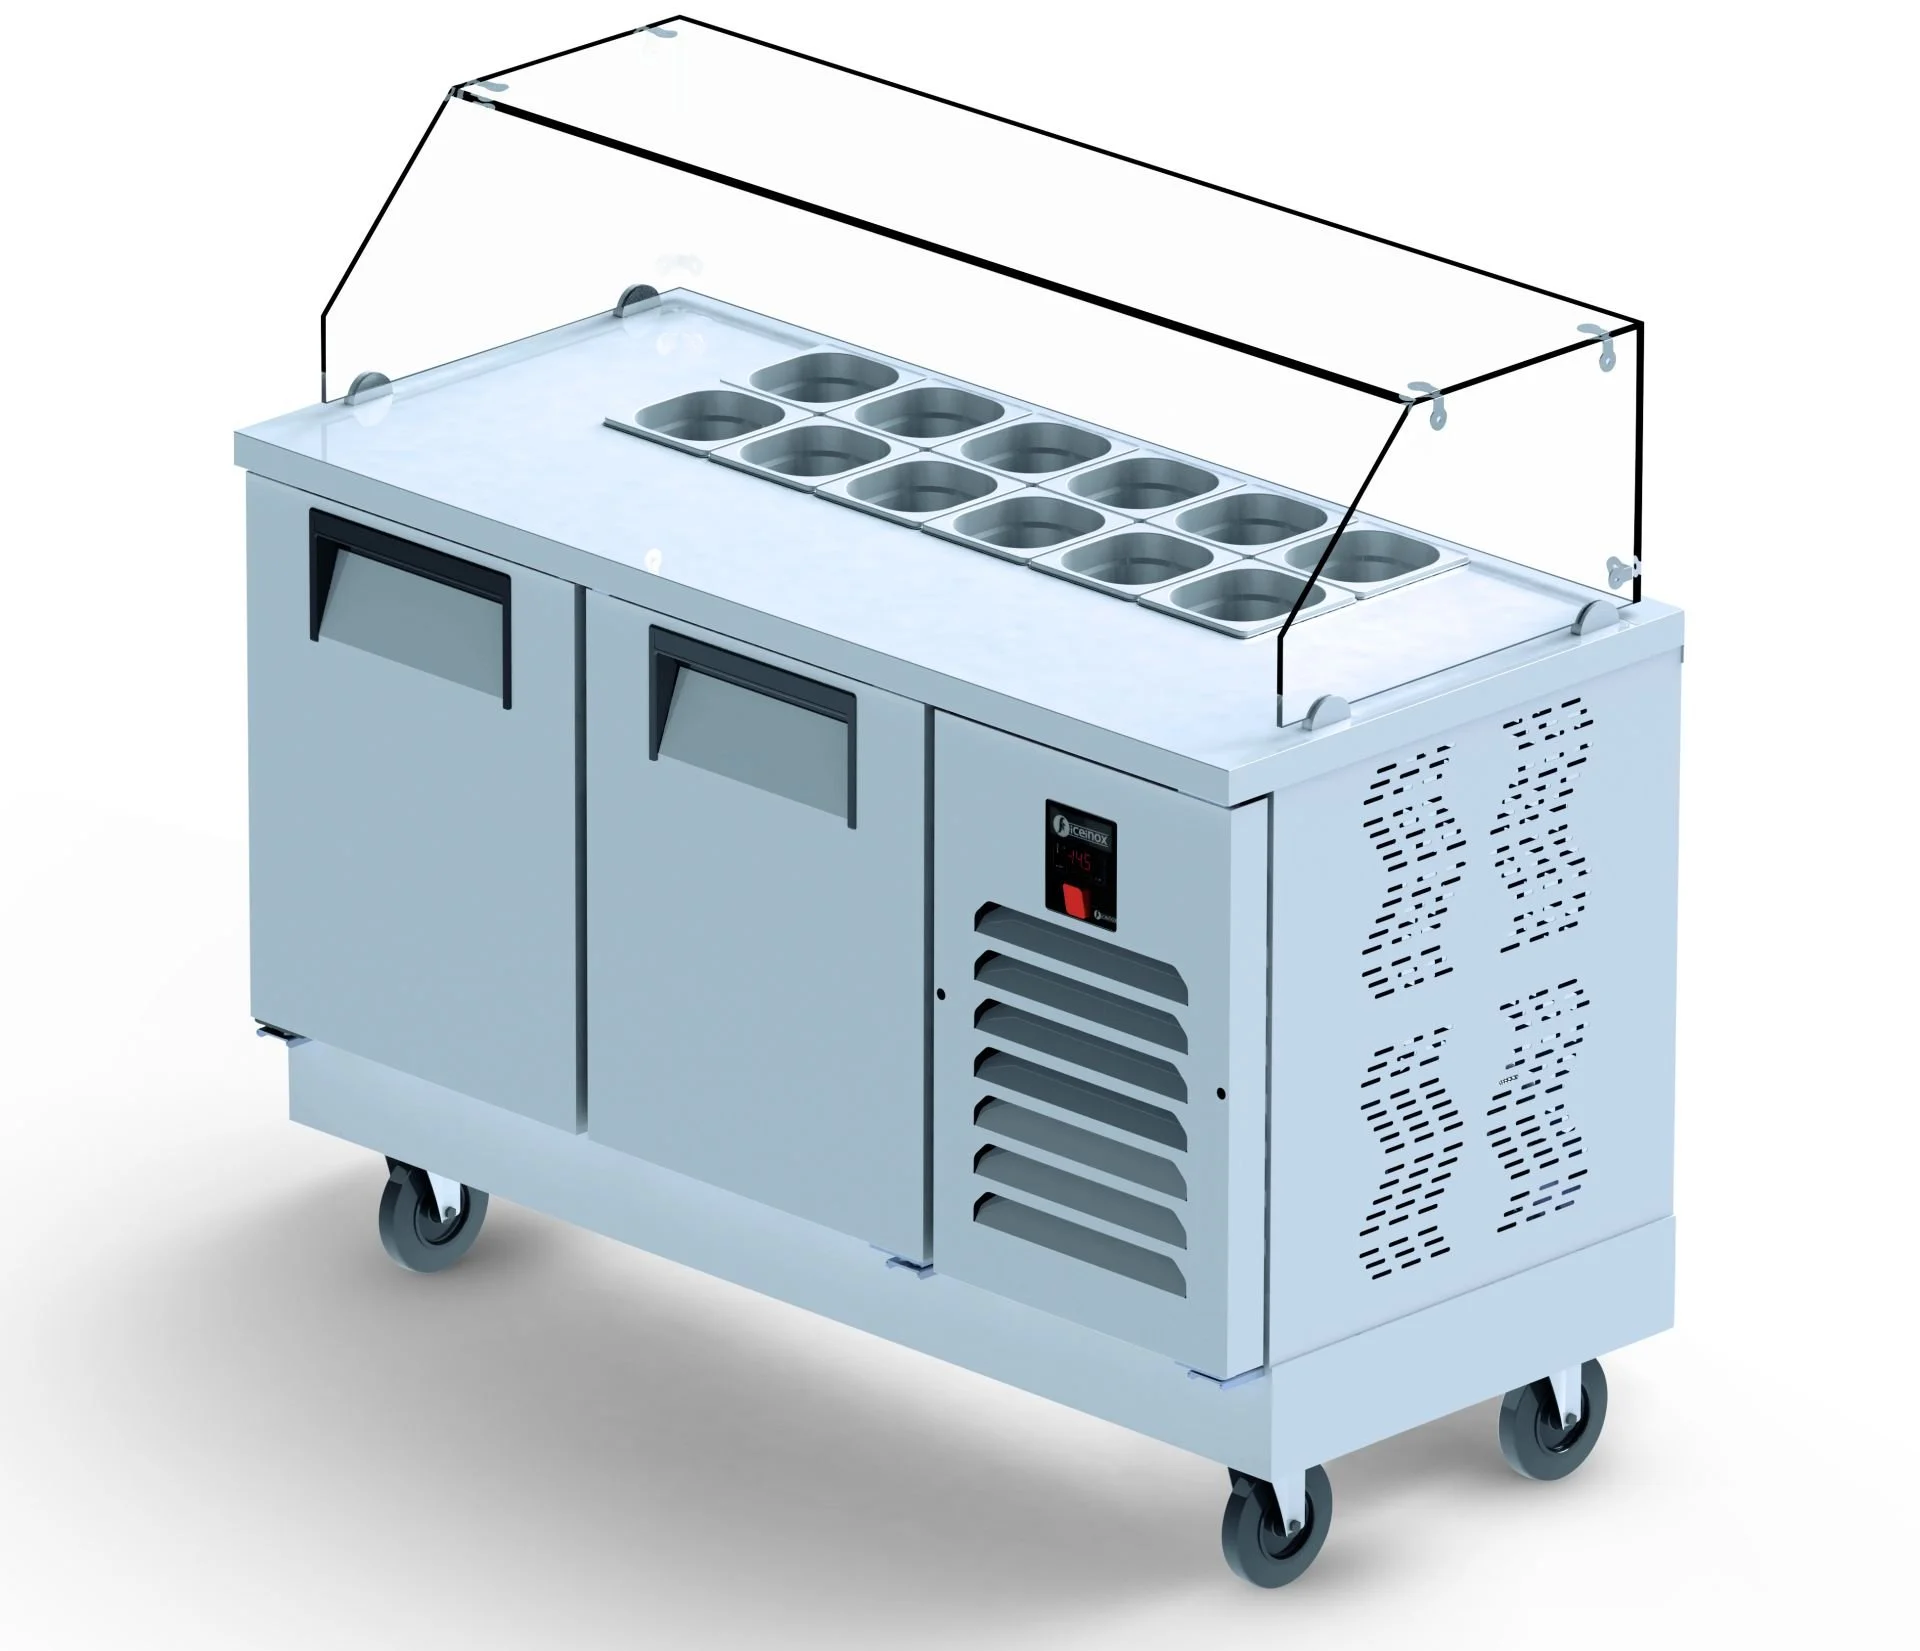 Iceinox FTS 515 Hazırlık Buzdolabı, 515 L, 3 Kapılı